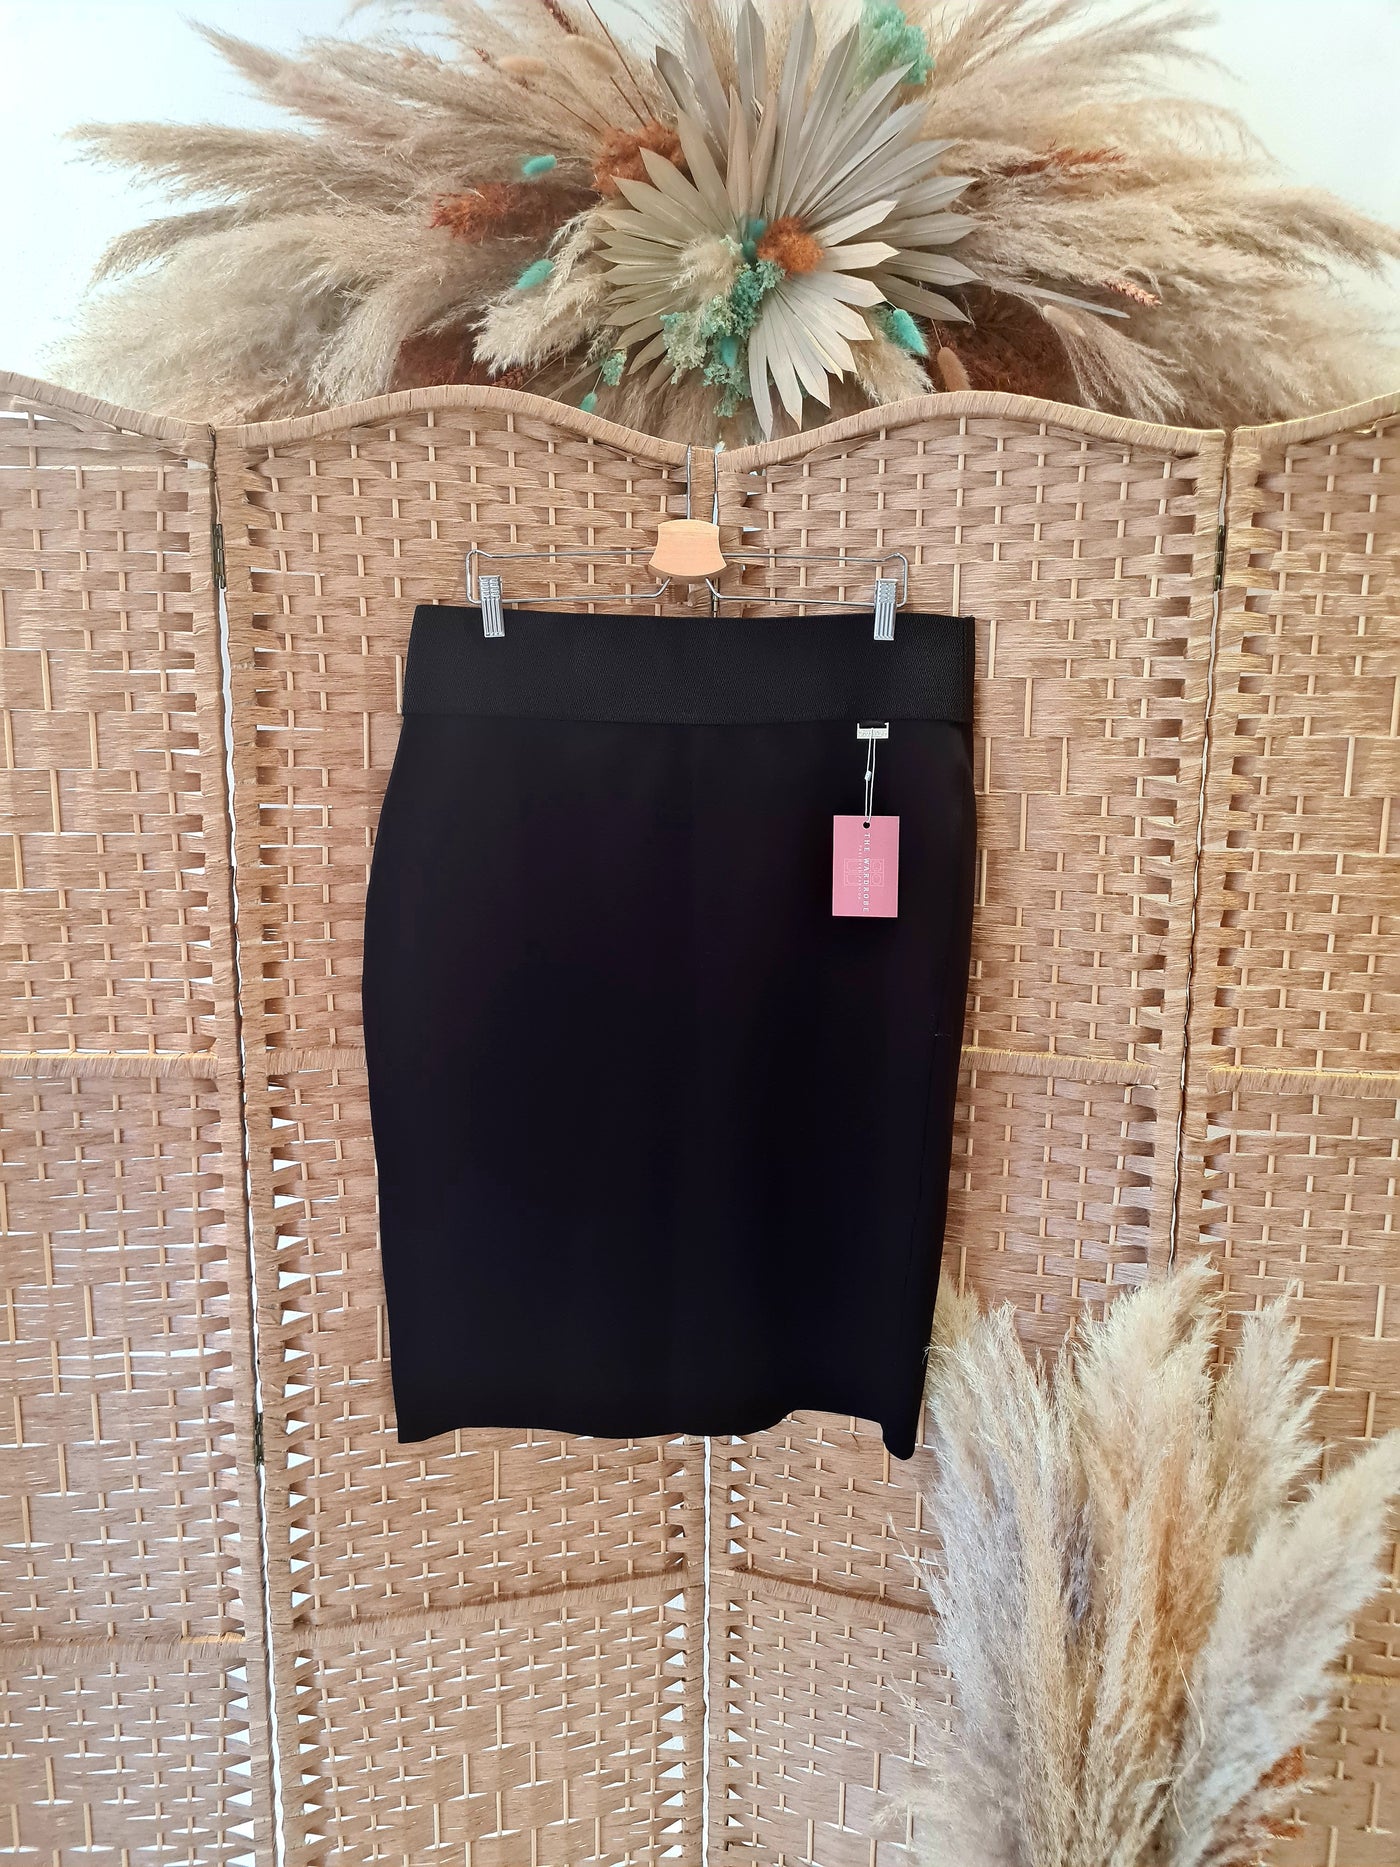 Calvin Klein black pencil skirt Large NWT